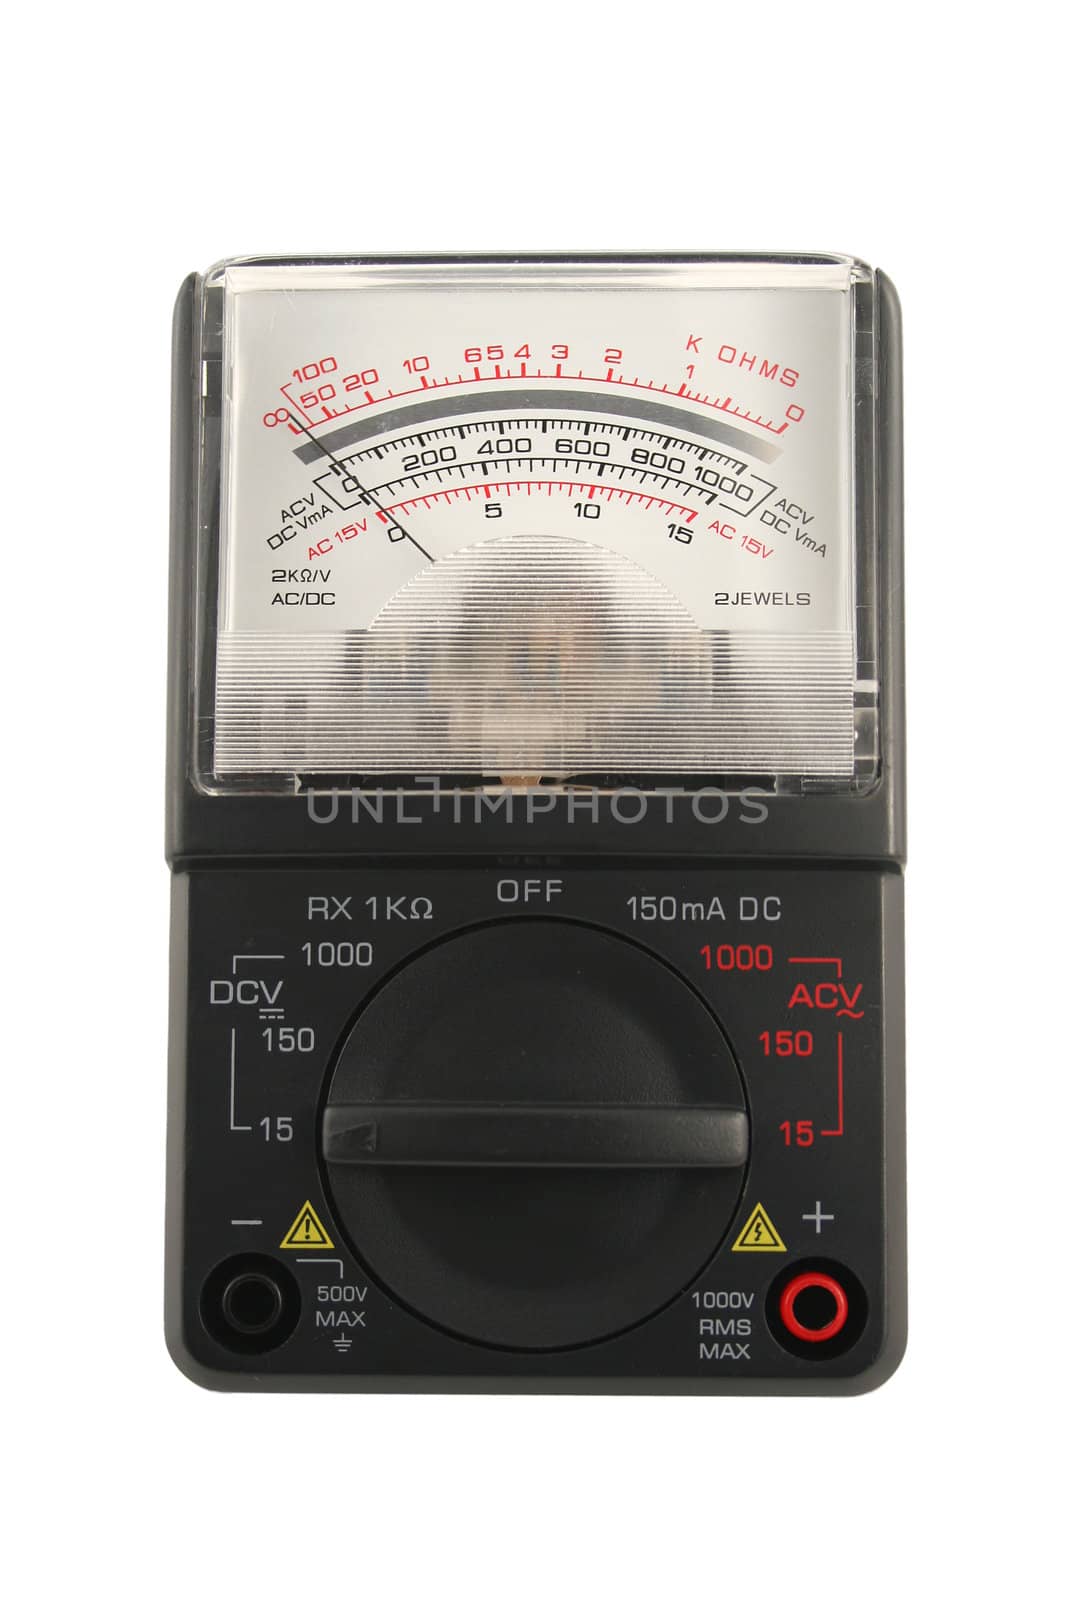 AC DC Voltage testing meter by njnightsky